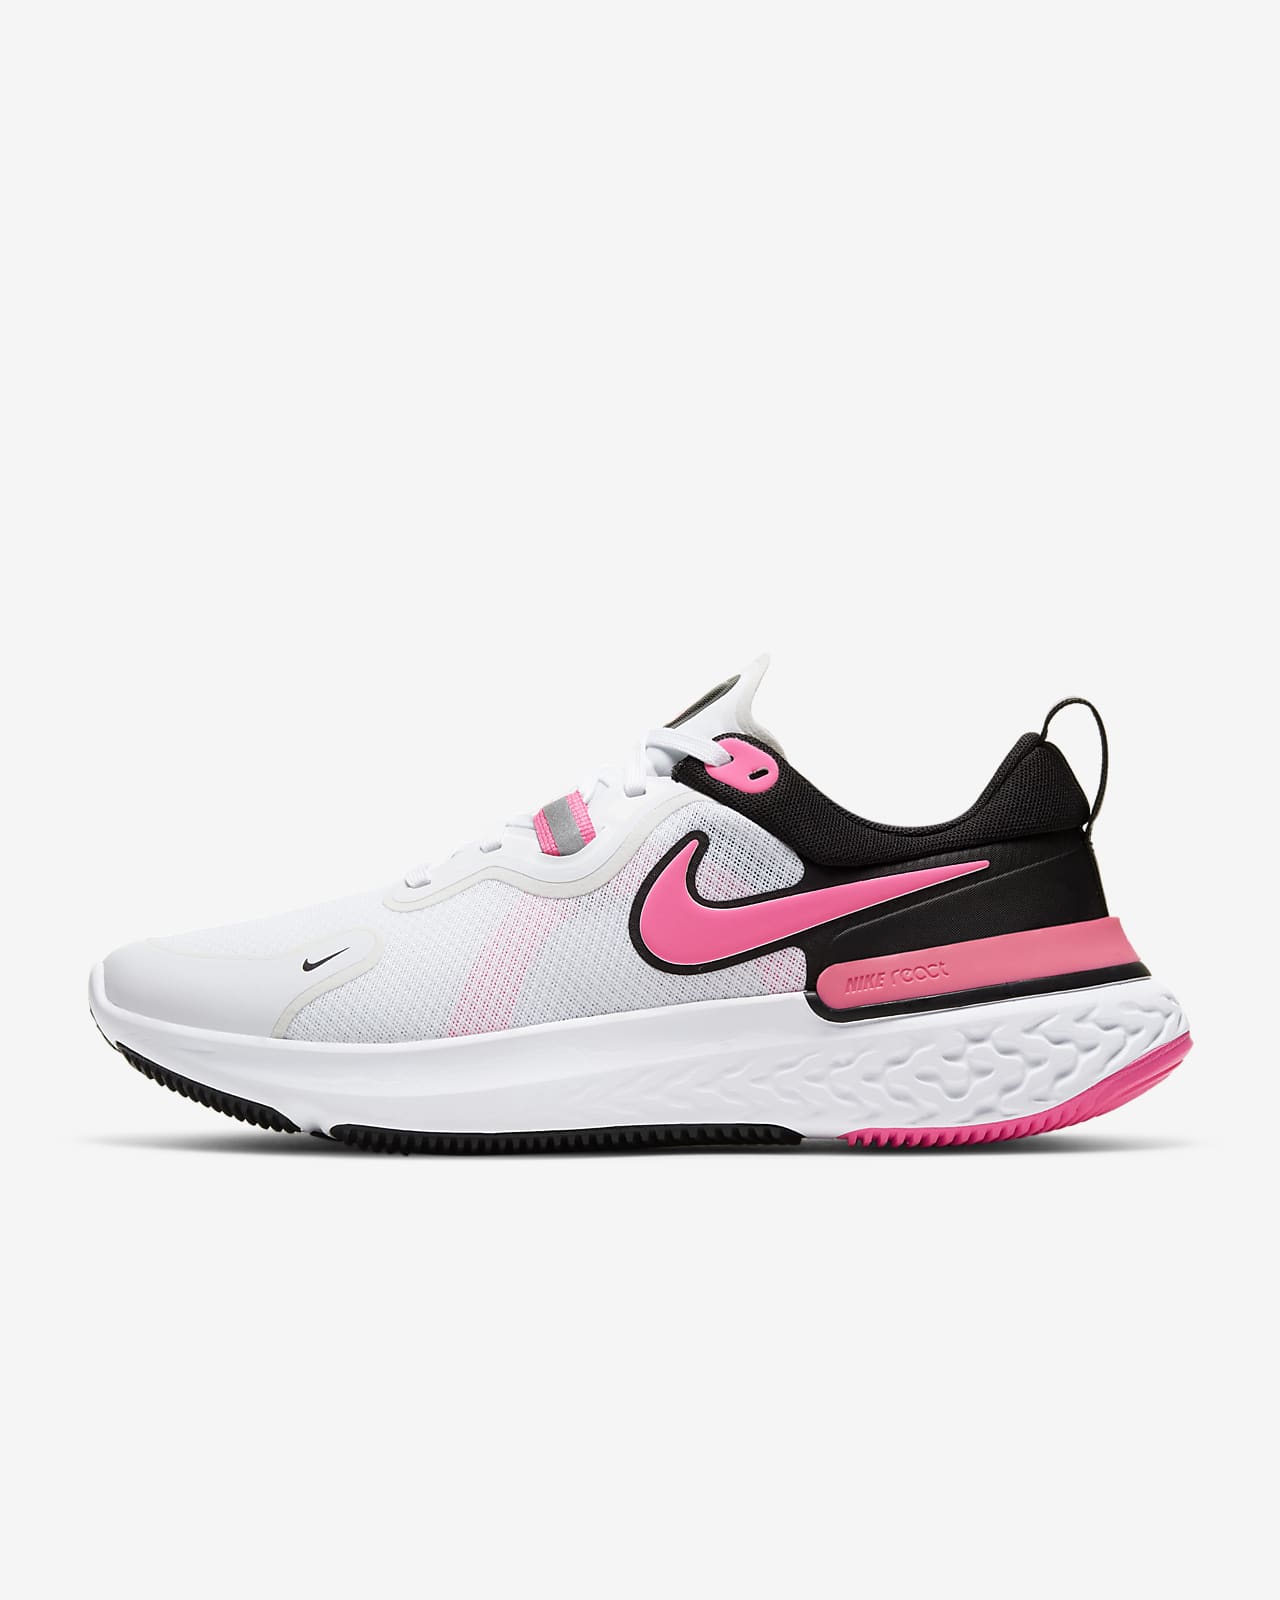 nike pink running shoes